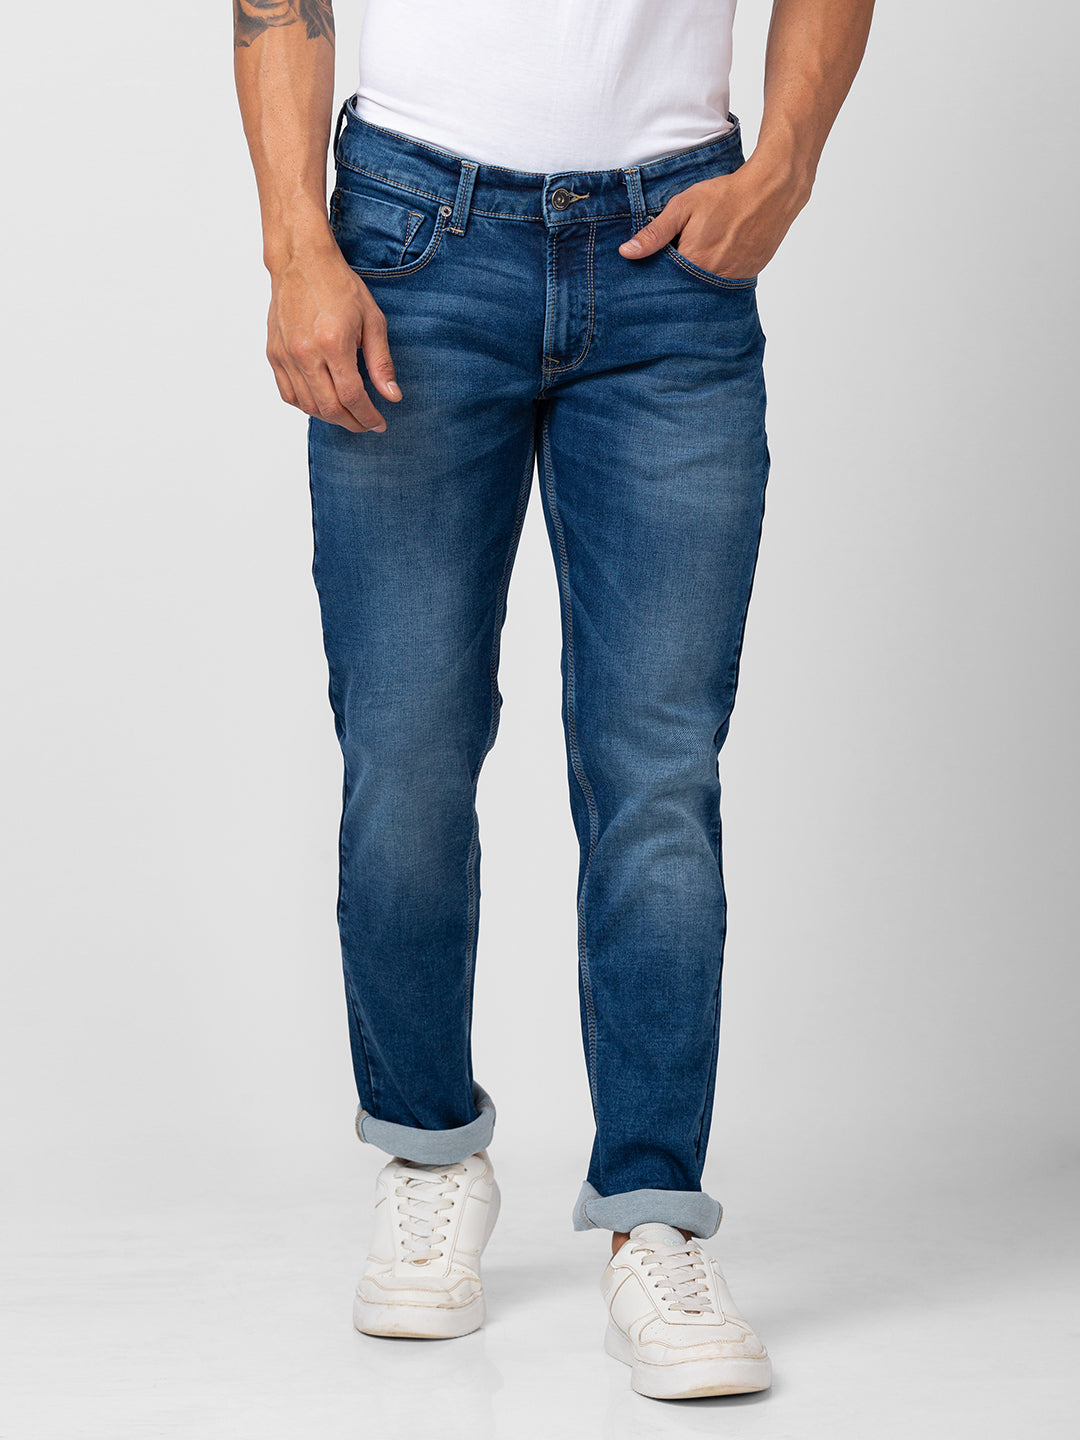 Men Spykar Denim Jeans - Buy Men Spykar Denim Jeans online in India